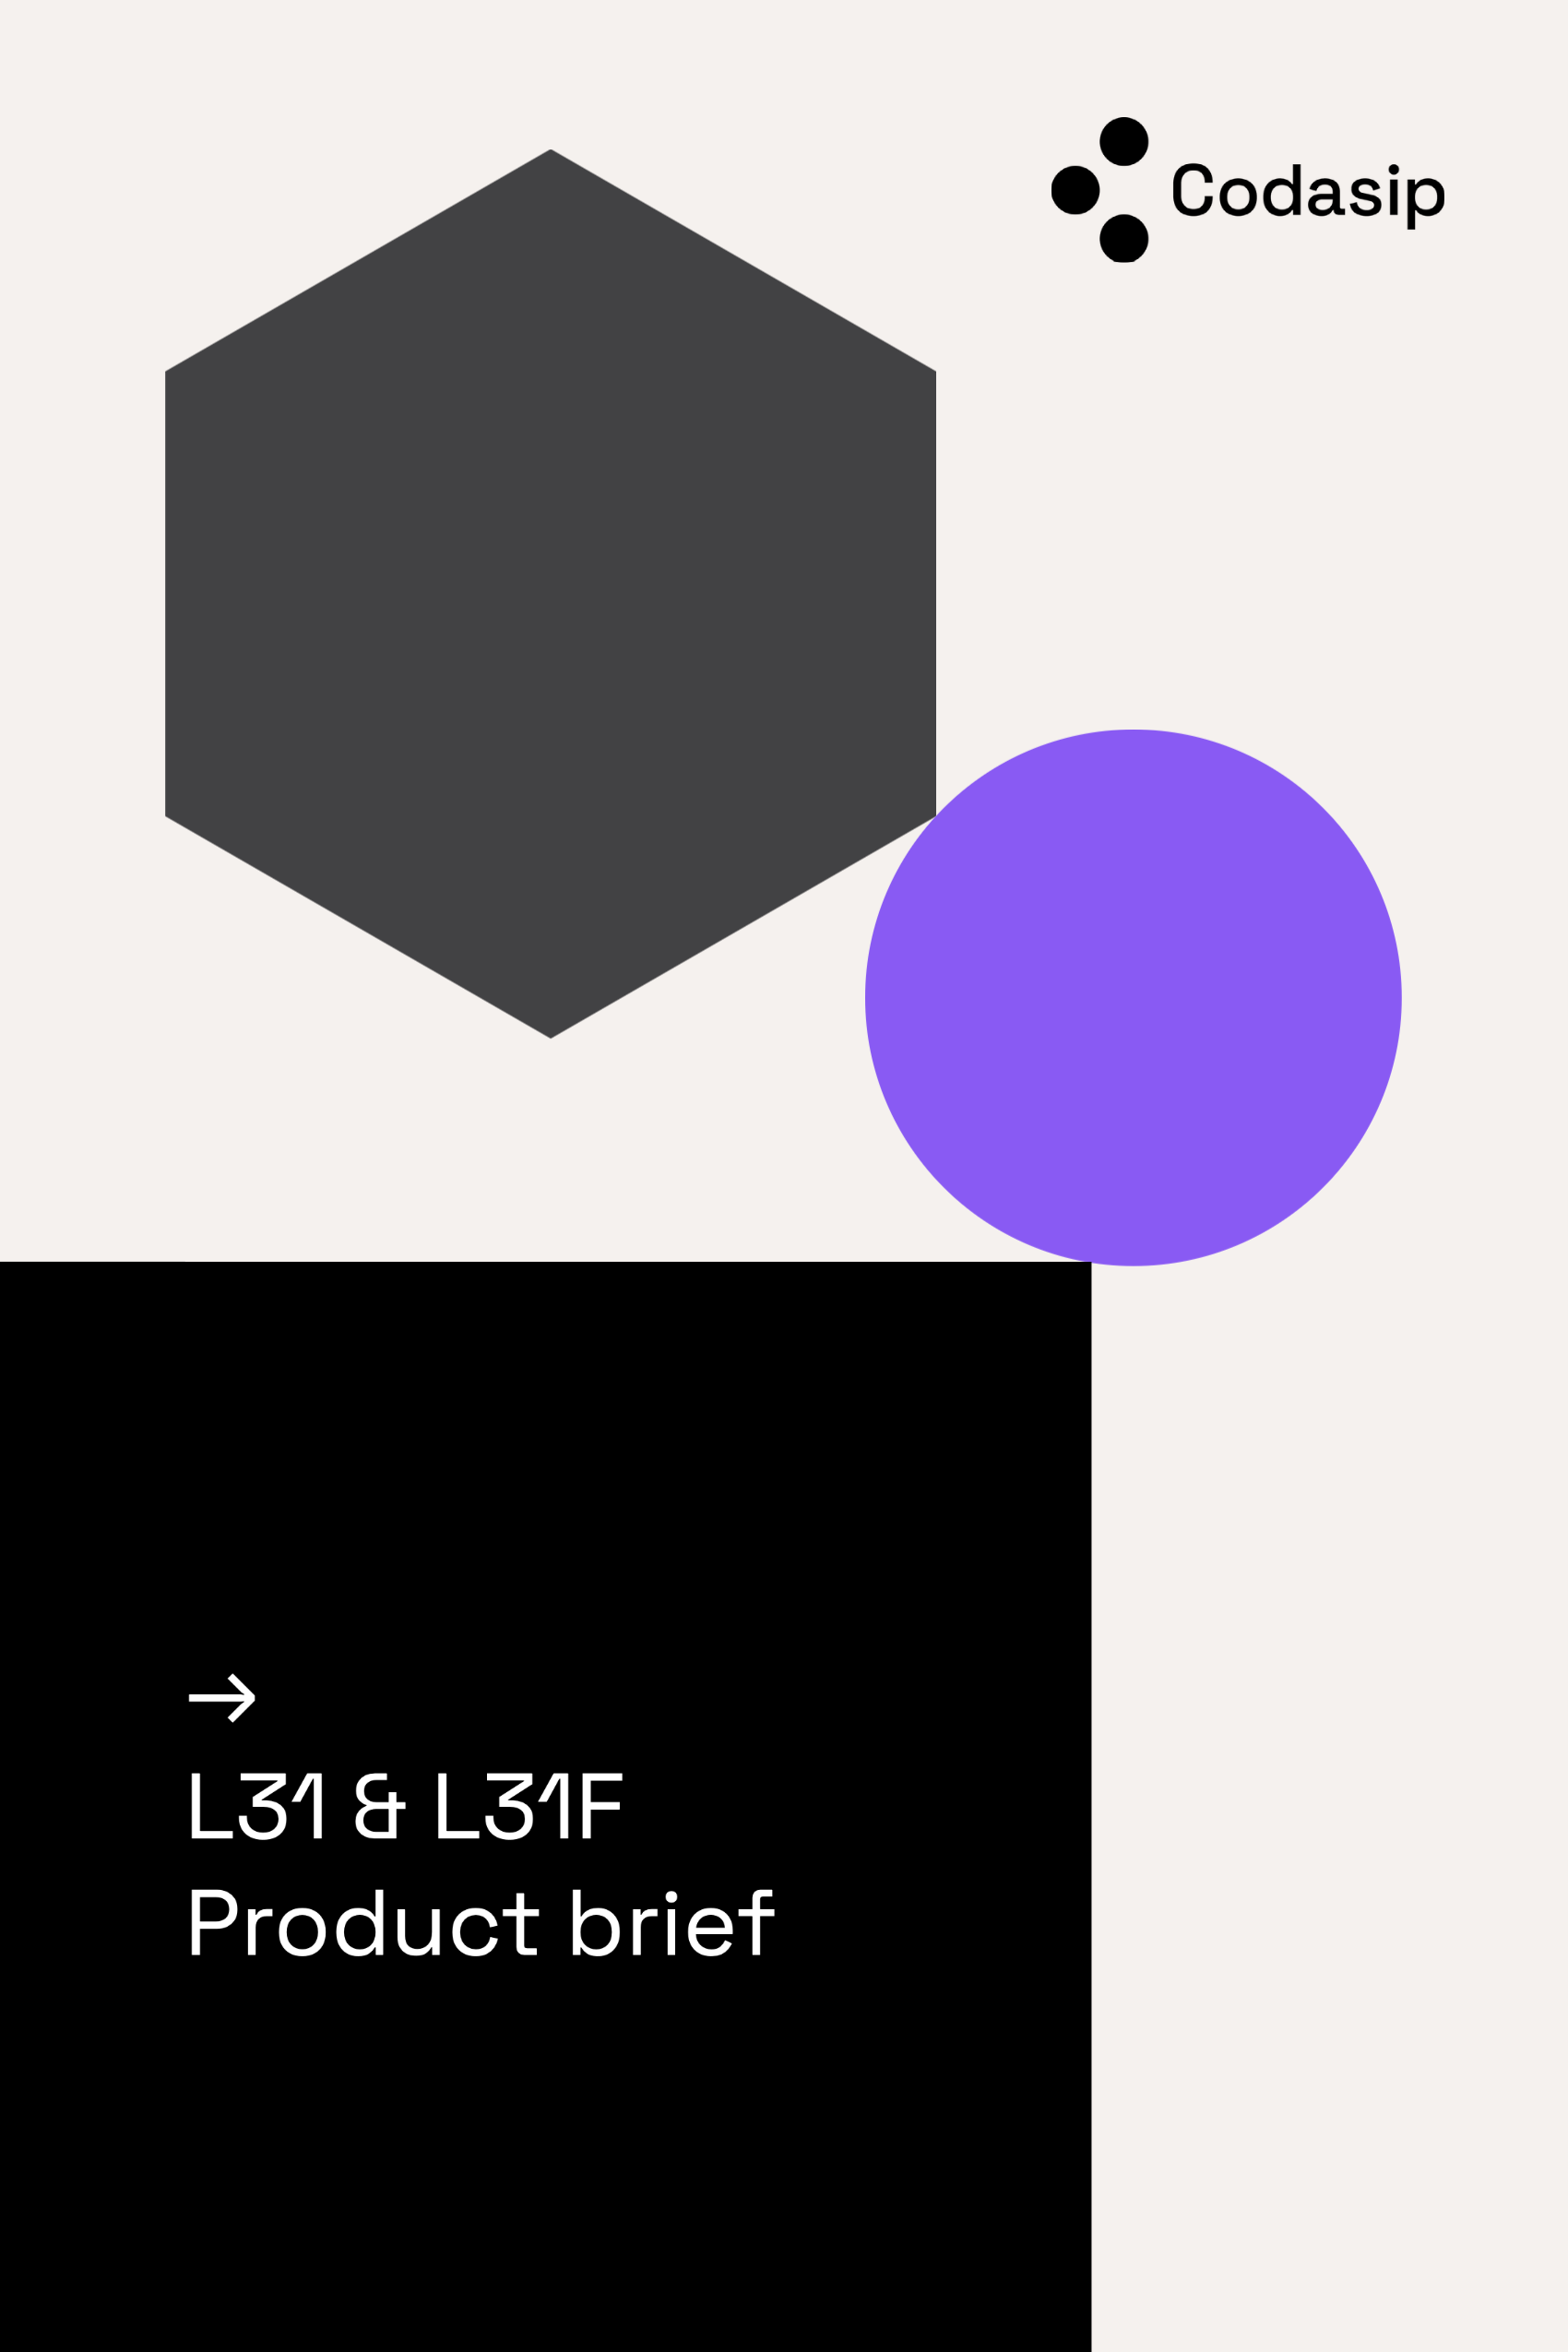 Whitepaper Cover - L31 & L31F product brief